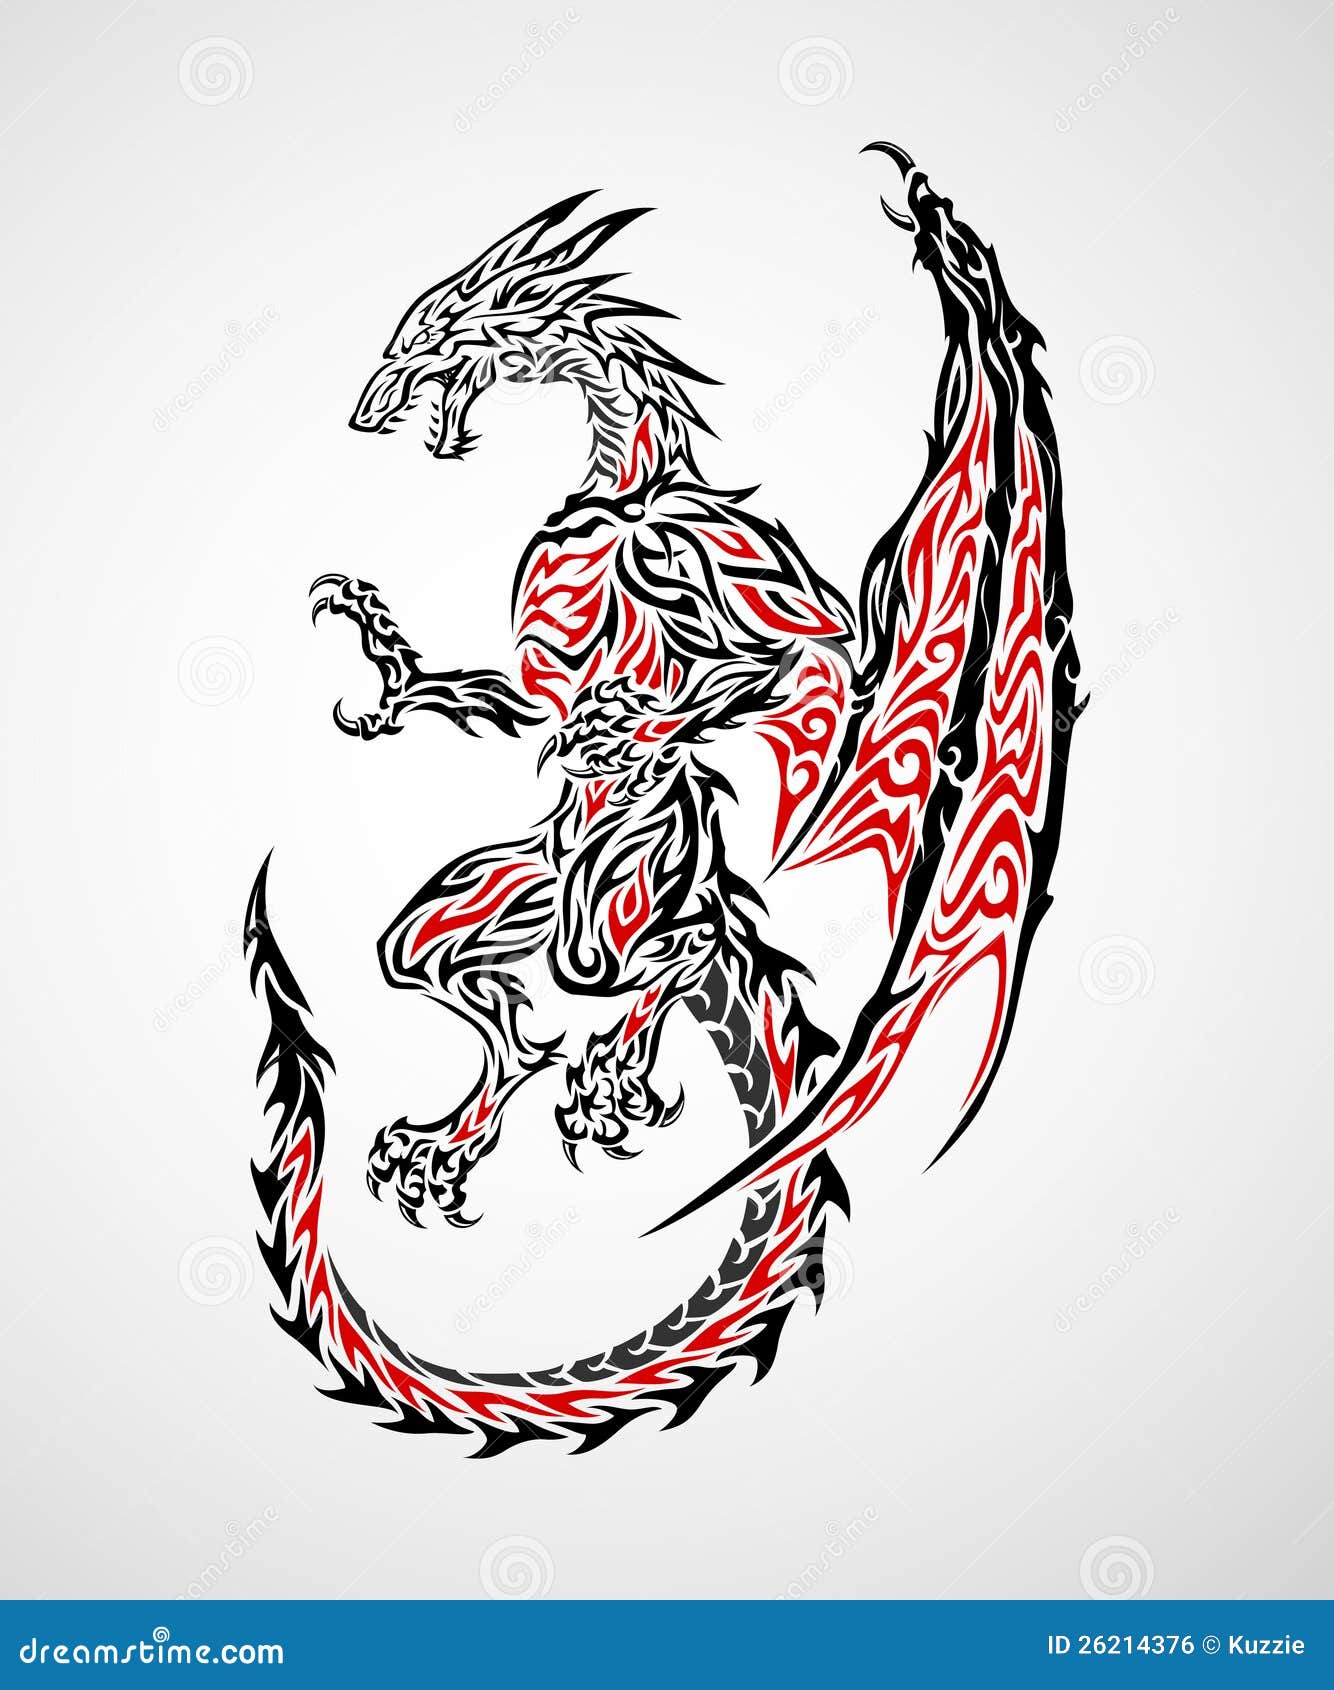 Dragon Tattoo 2 stock vector. Illustration of decoration - 26214376